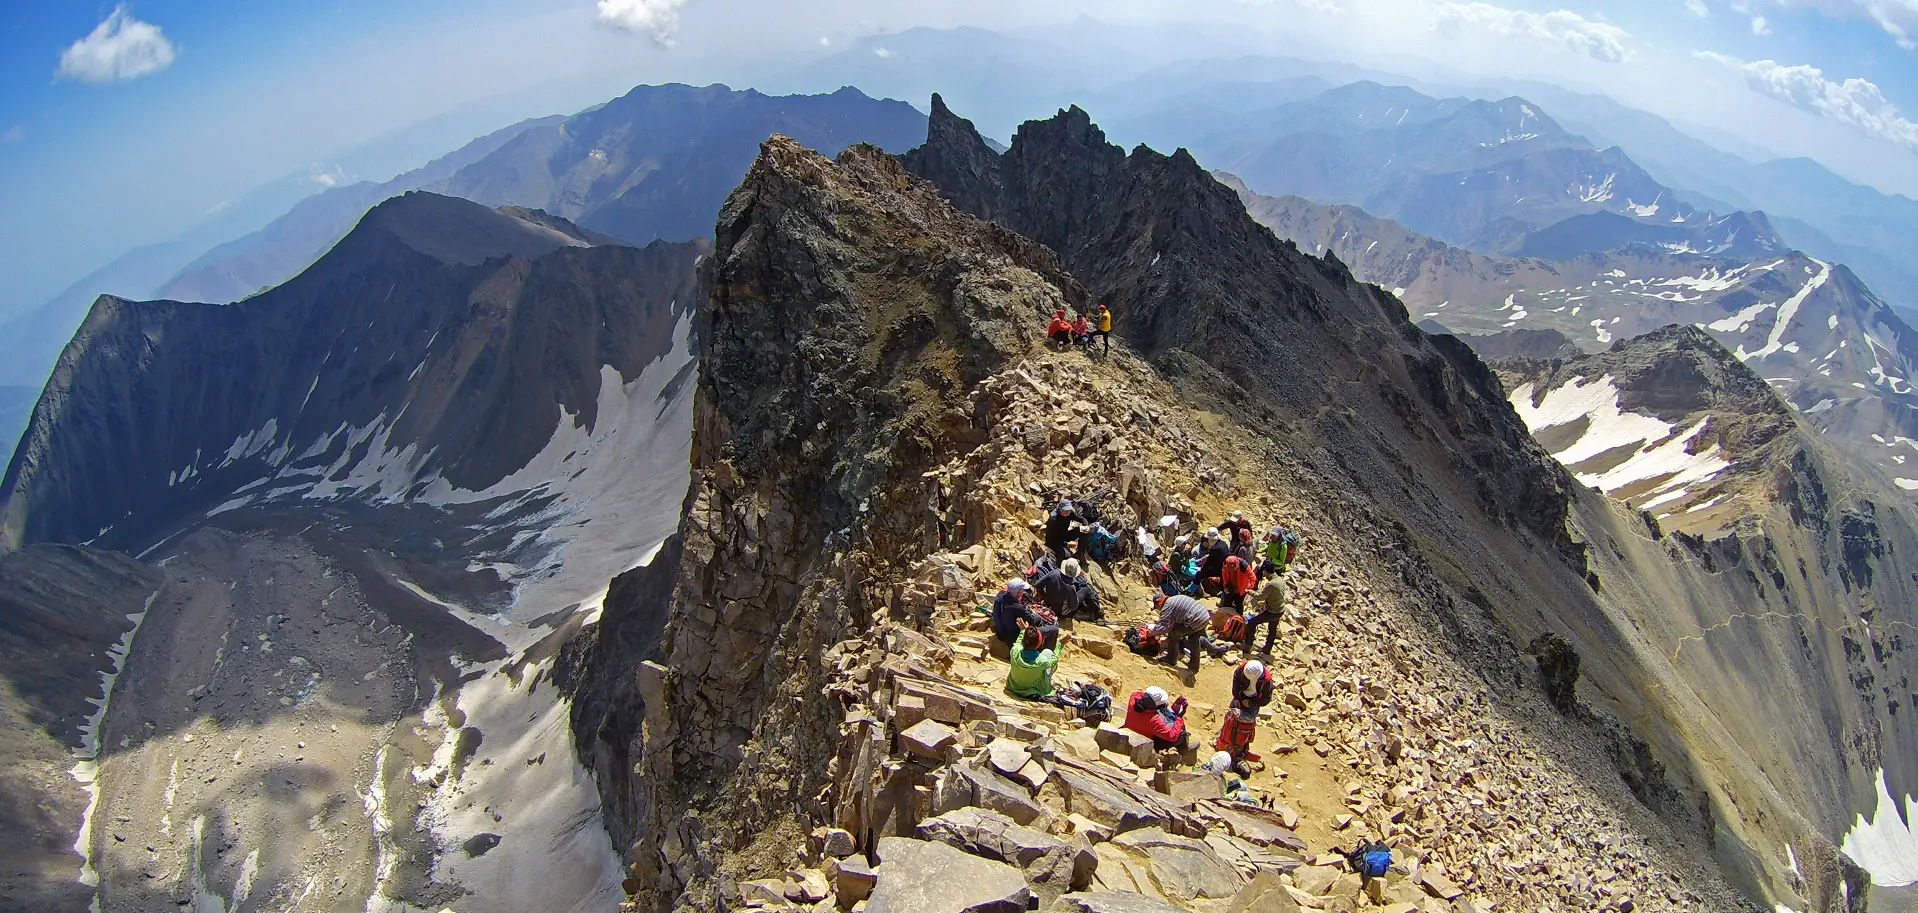 German Ridge and Mount Damavand Climbing Tour